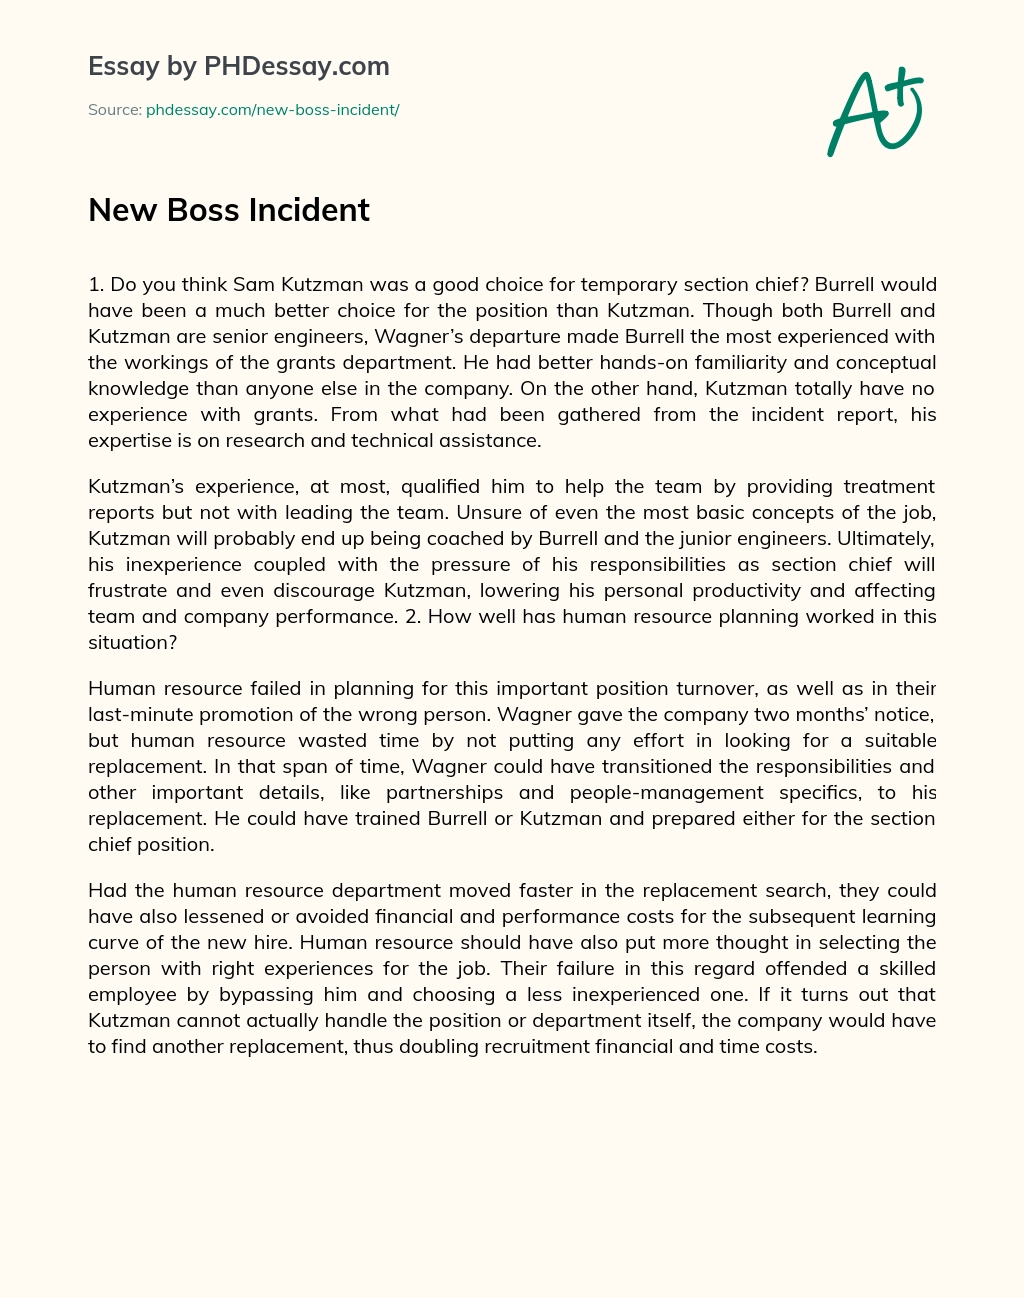 New Boss Incident essay